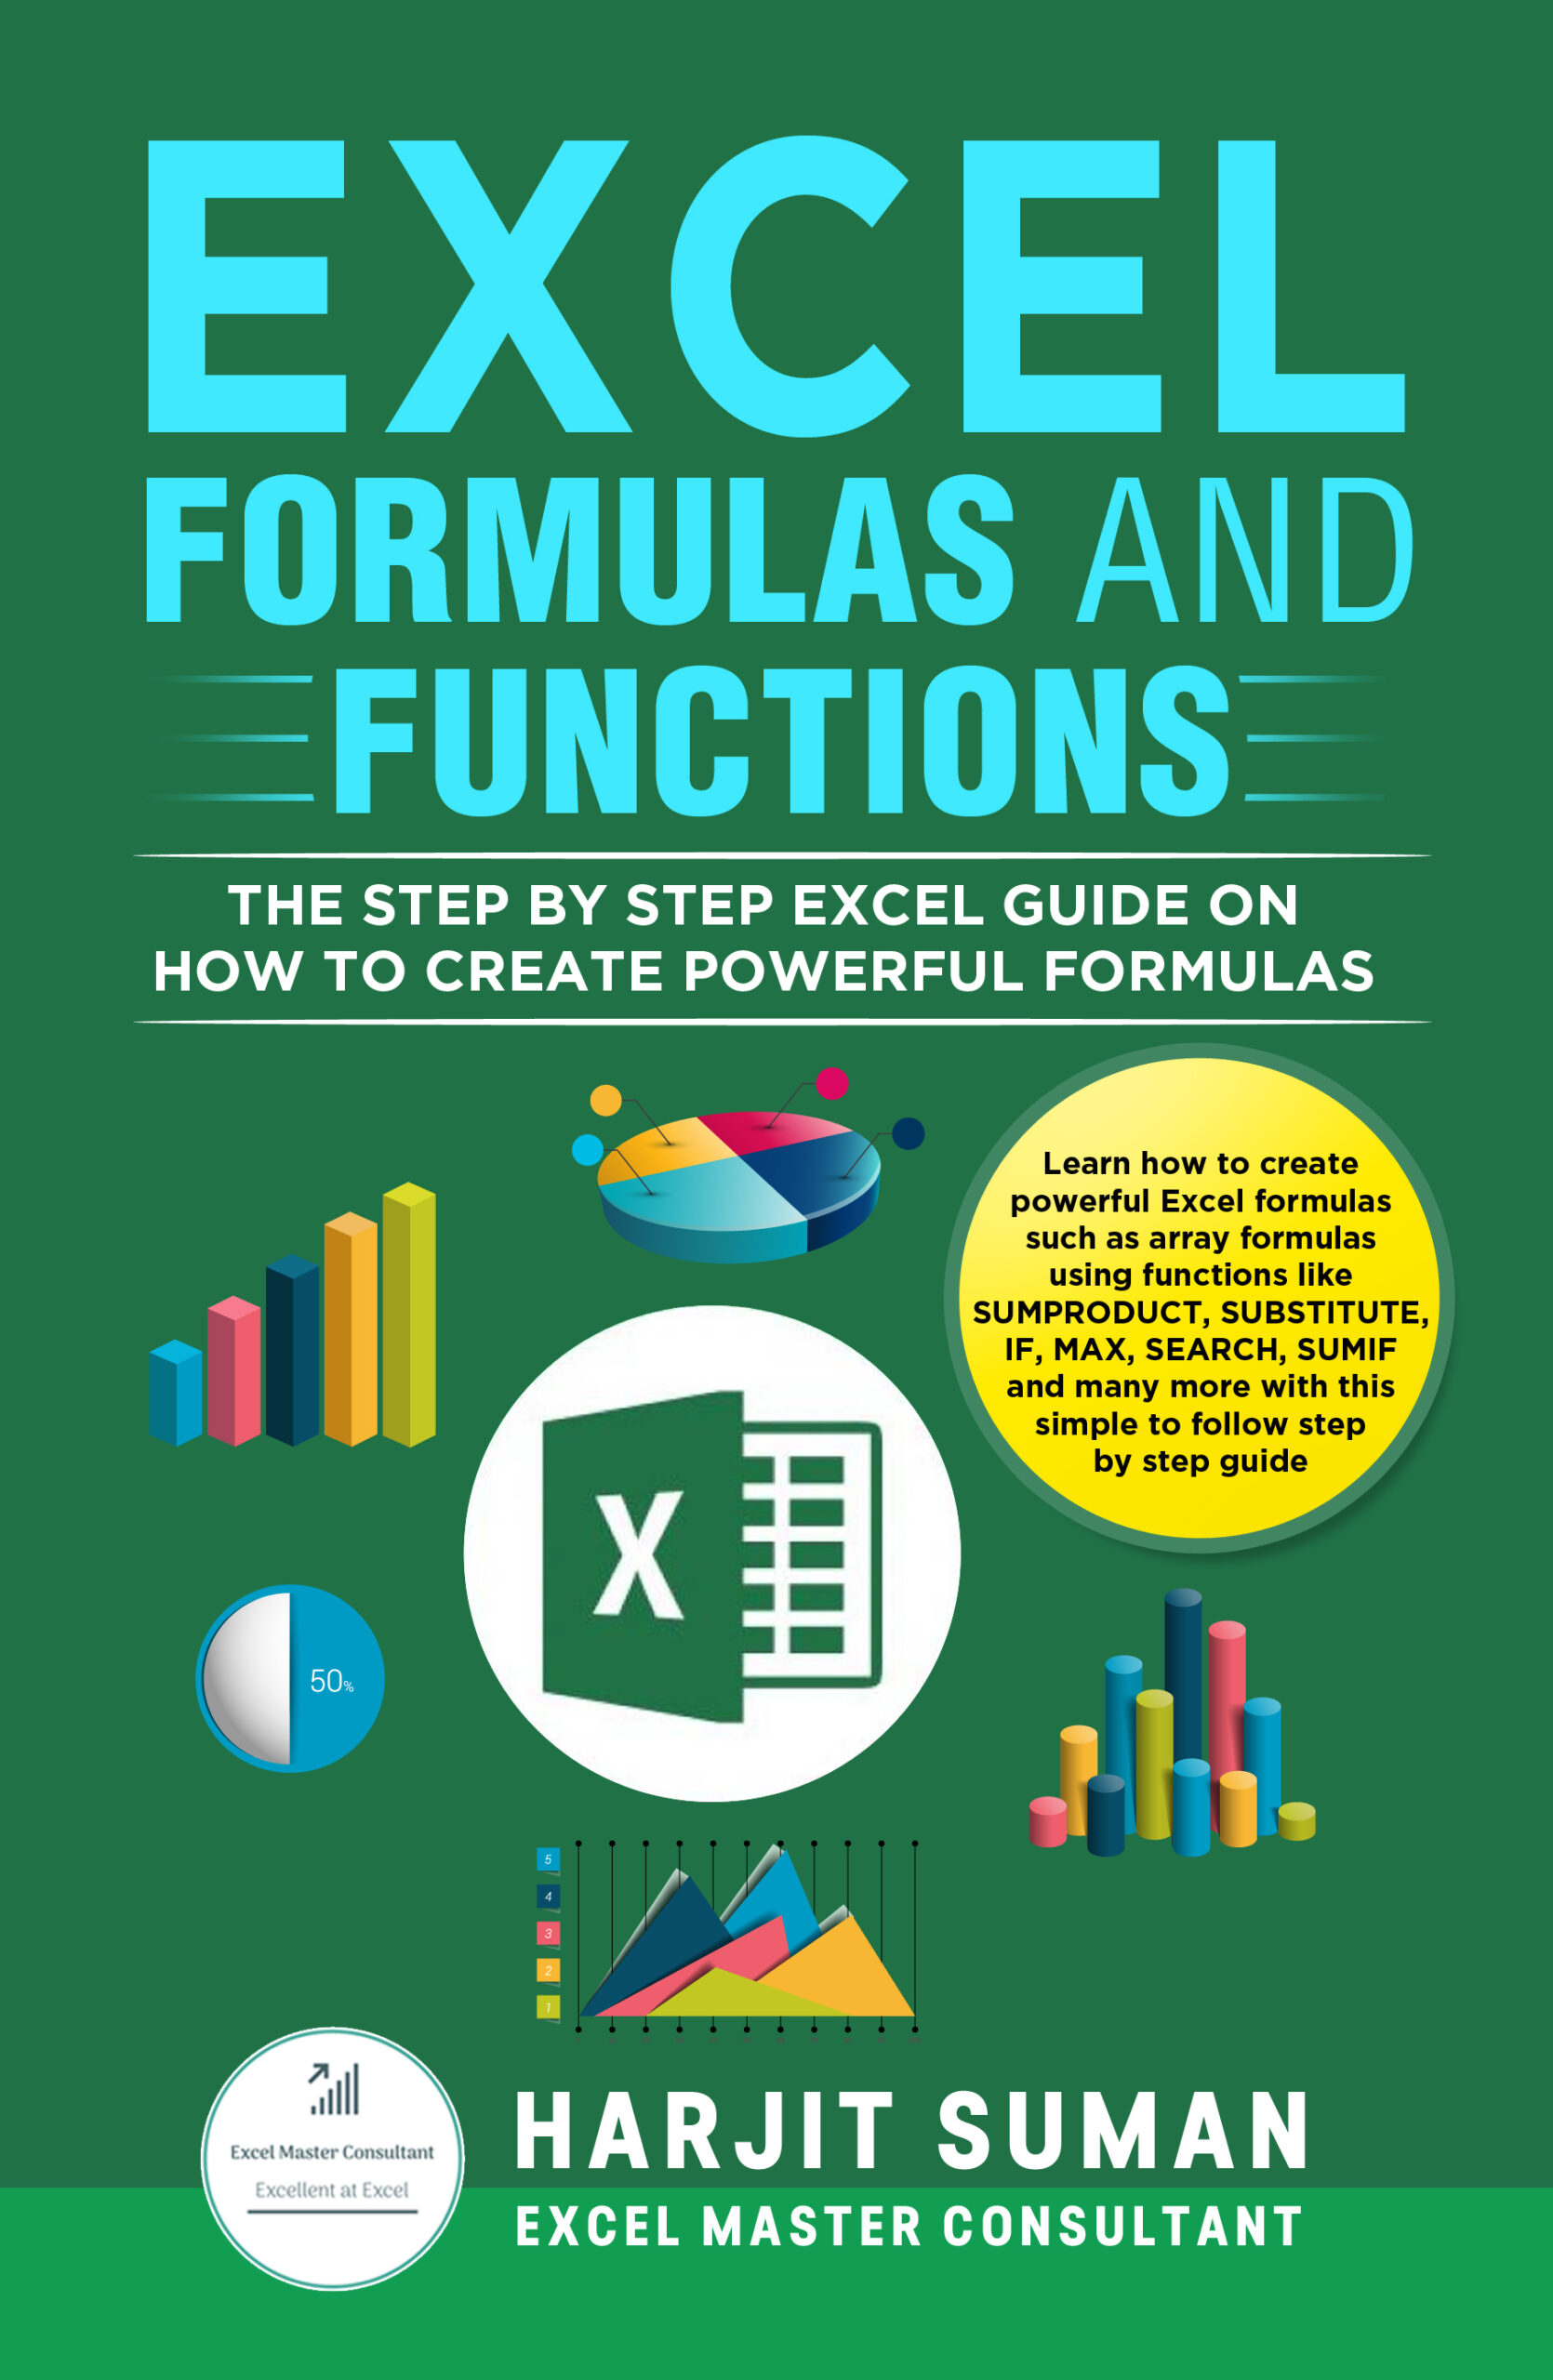 Excel advanced formulas book by Harjit Suman